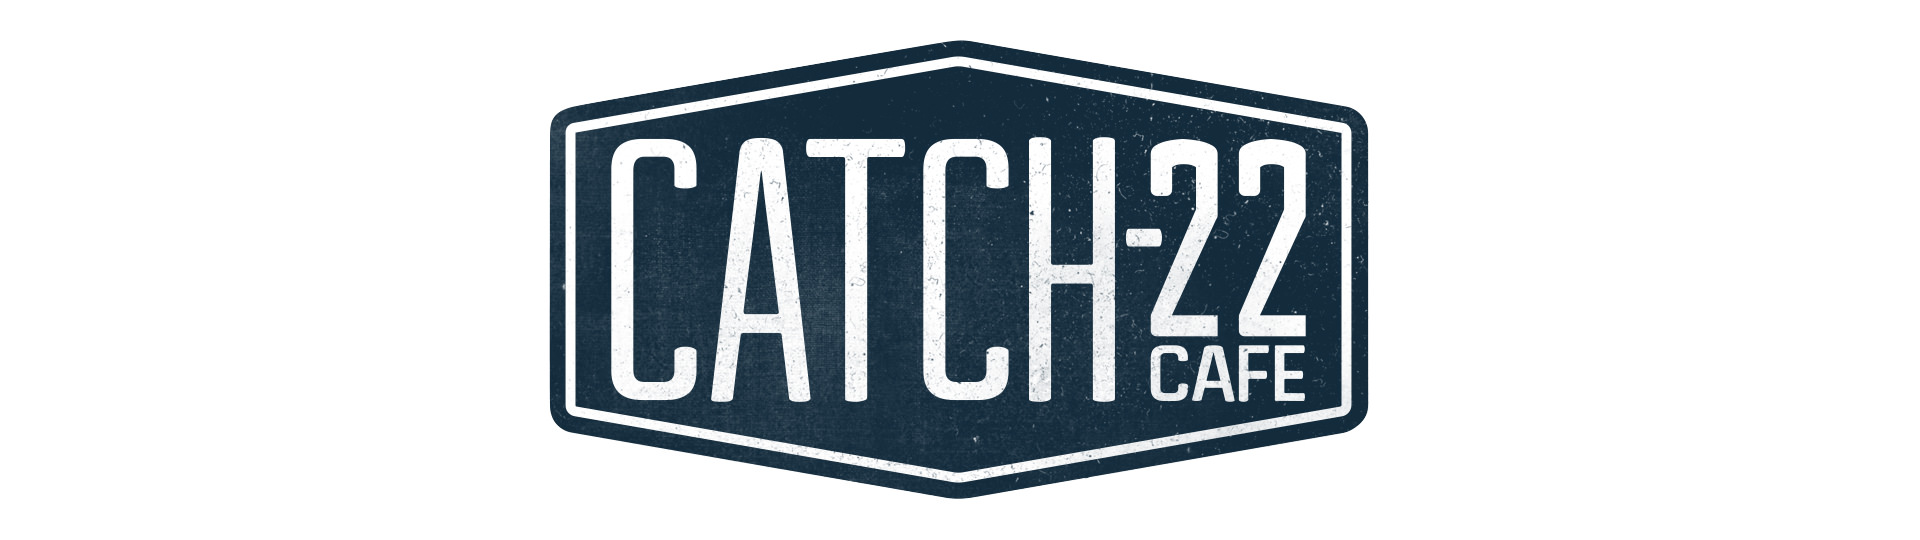 Catch-22 Cafe logo